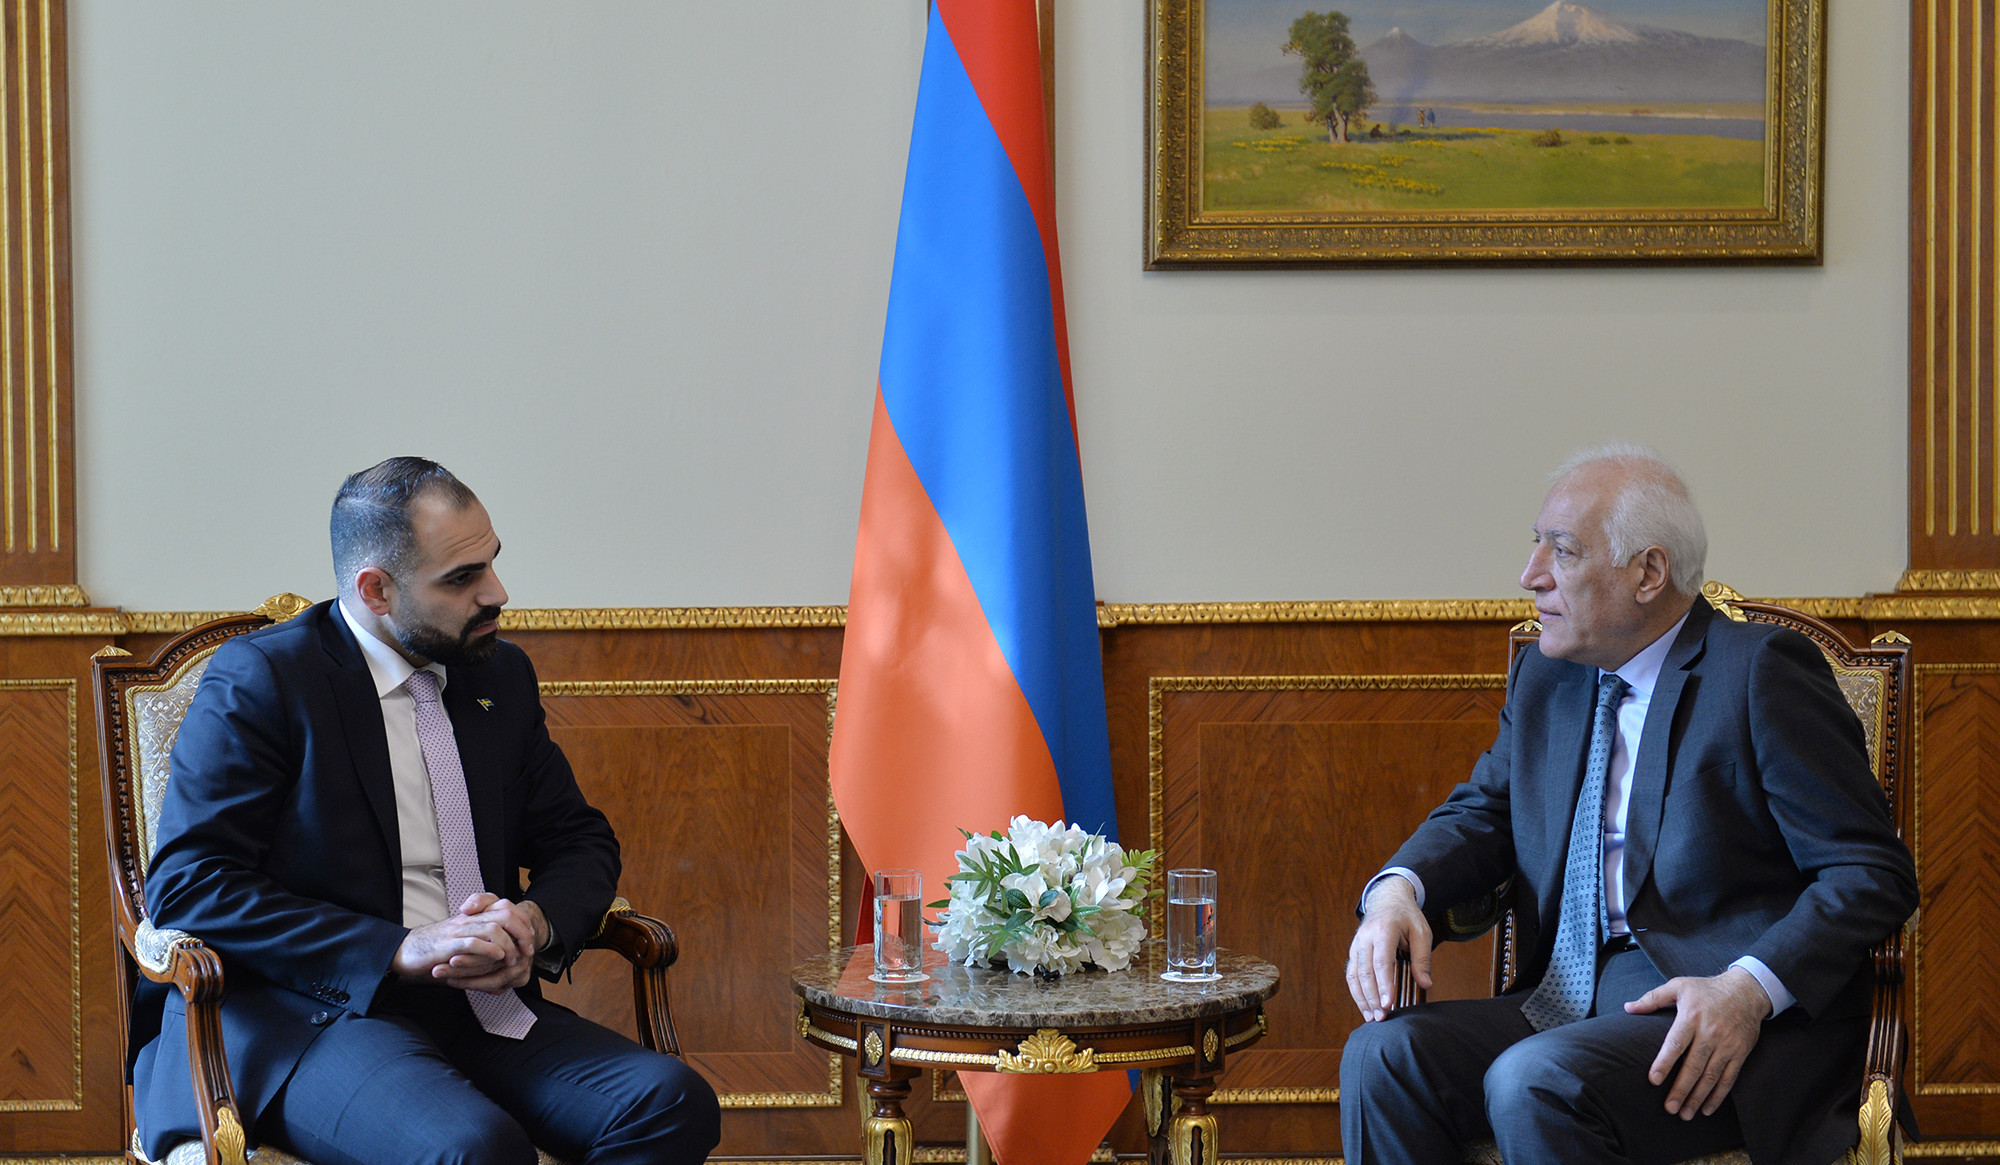 President of Armenia and Swedish Parliament member Arin Karapet discussed perspectives of Armenian-Swedish cooperation